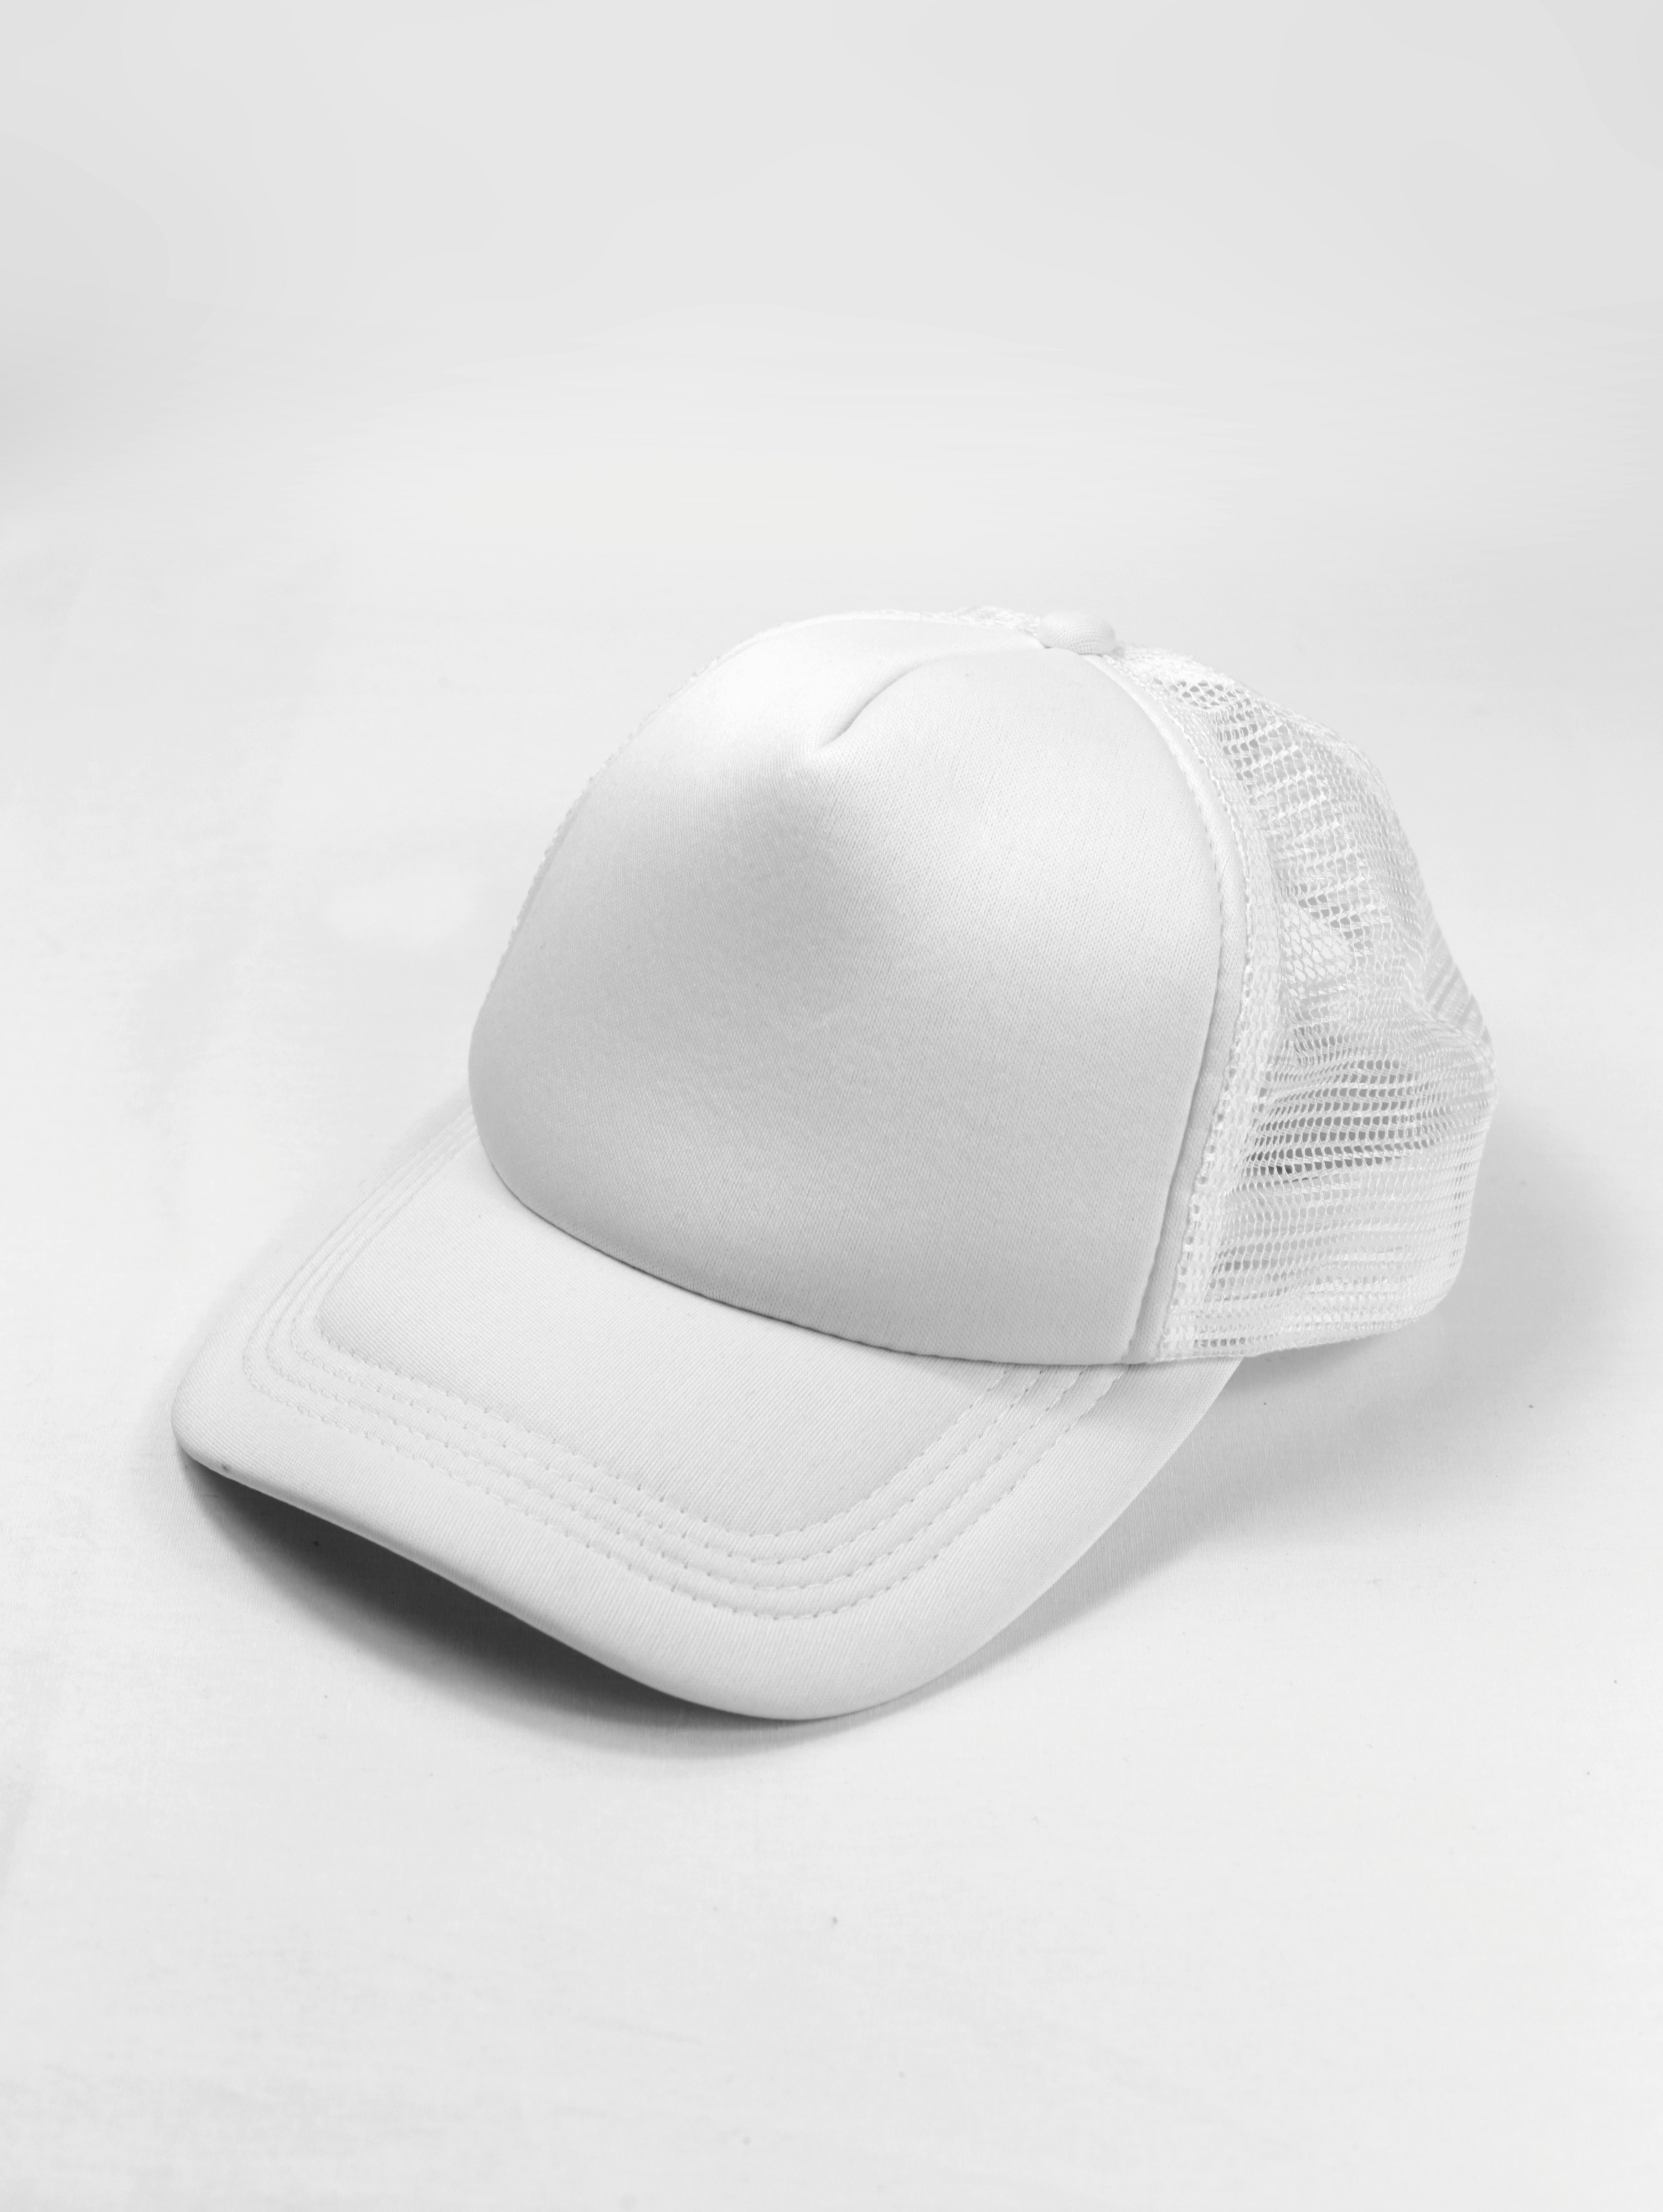 A white cap hat mockup